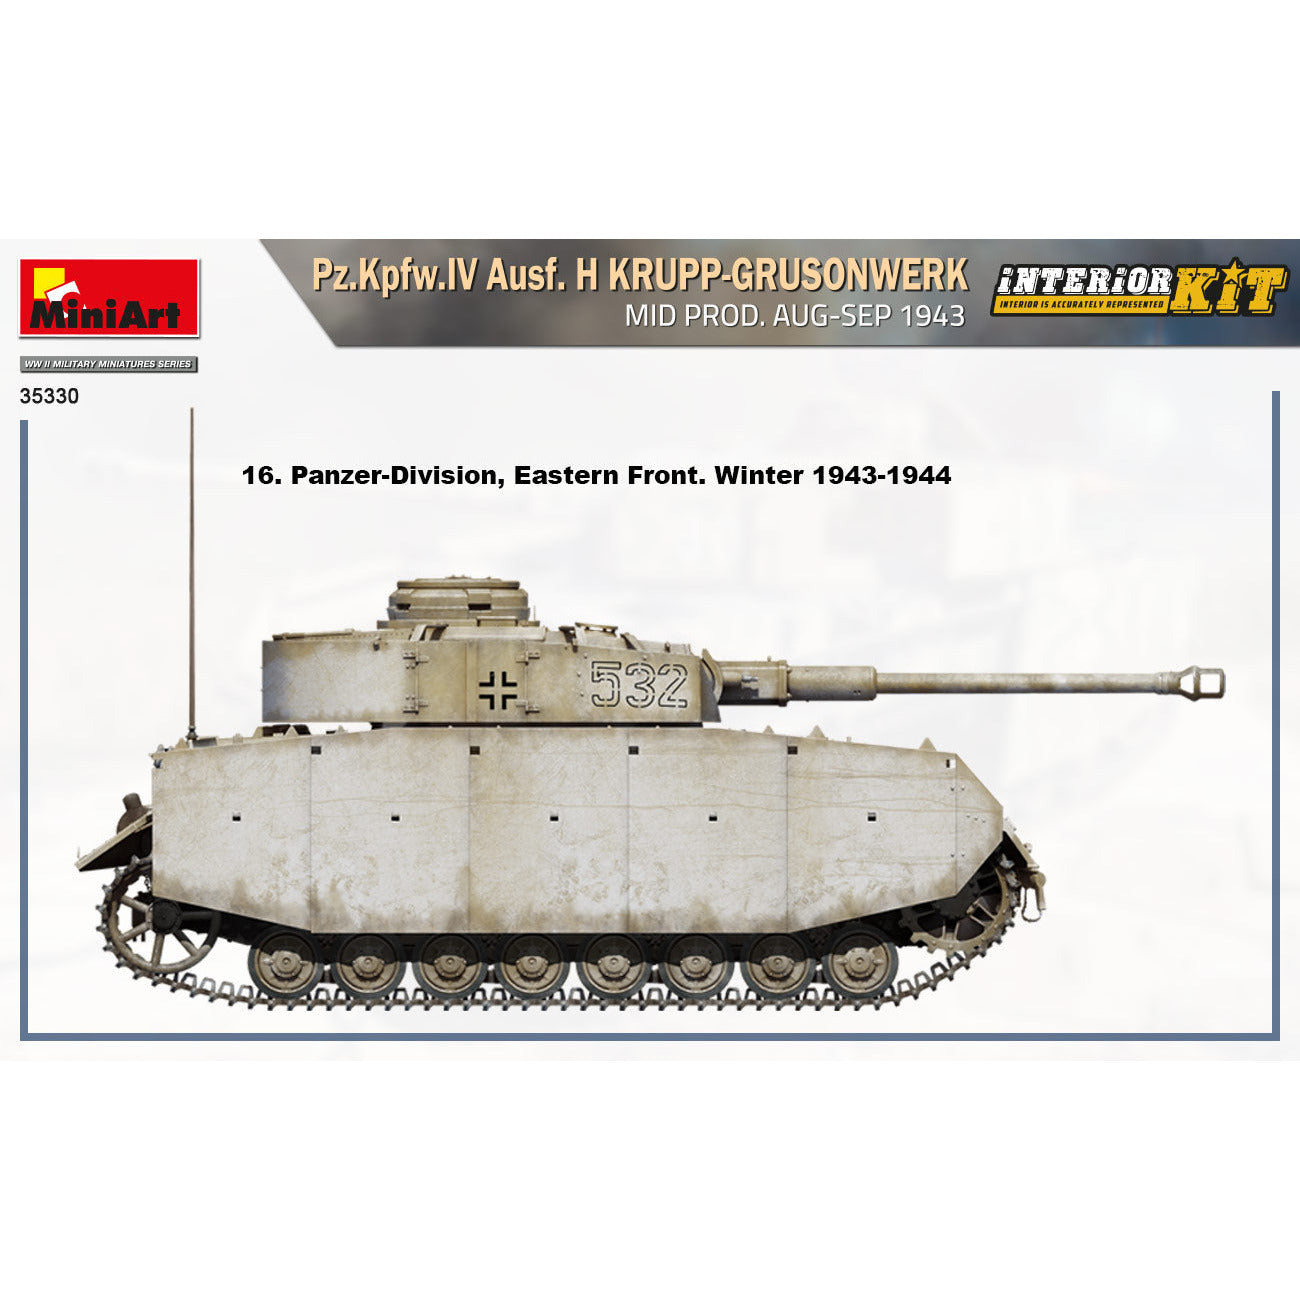 MINIART 1/35 Pz.Kpfw.IV Ausf. H Krupp-Grusonwerk. Mid Prod. Aug-Sep 1943. Interior Kit